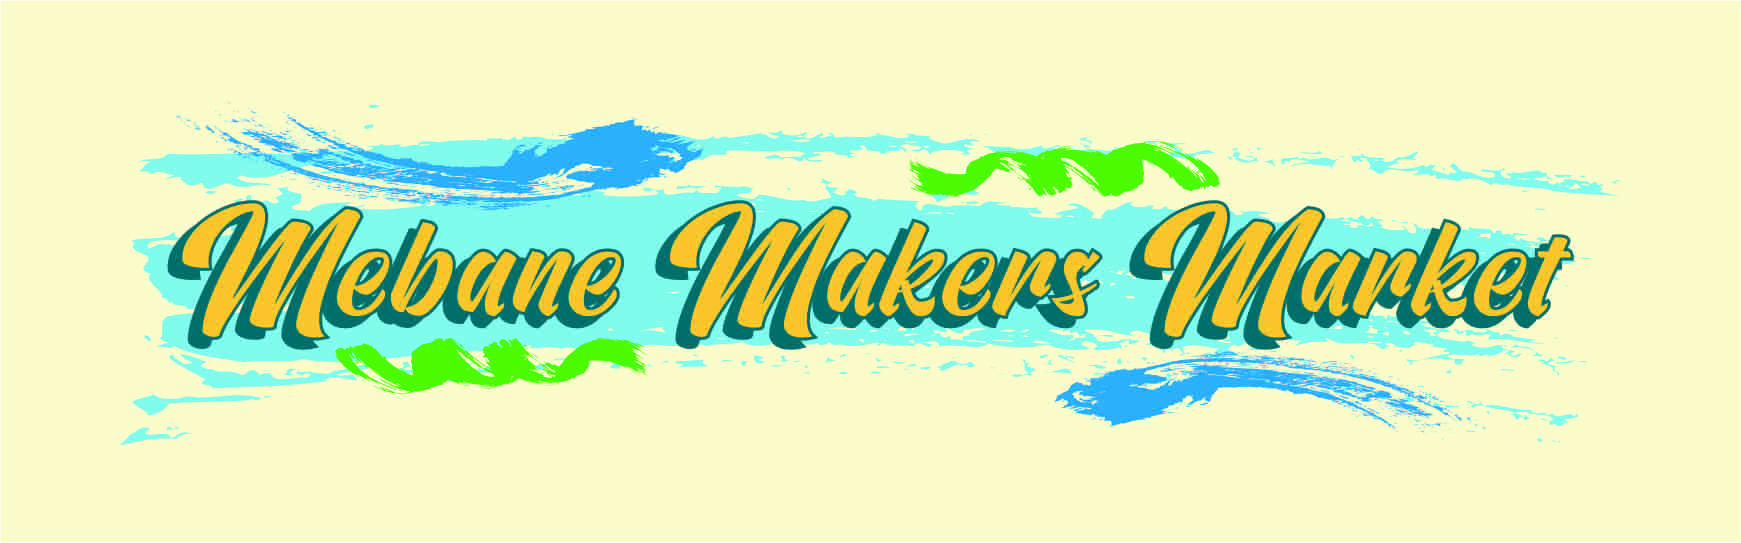 Mebane Maker's Market - May cover image